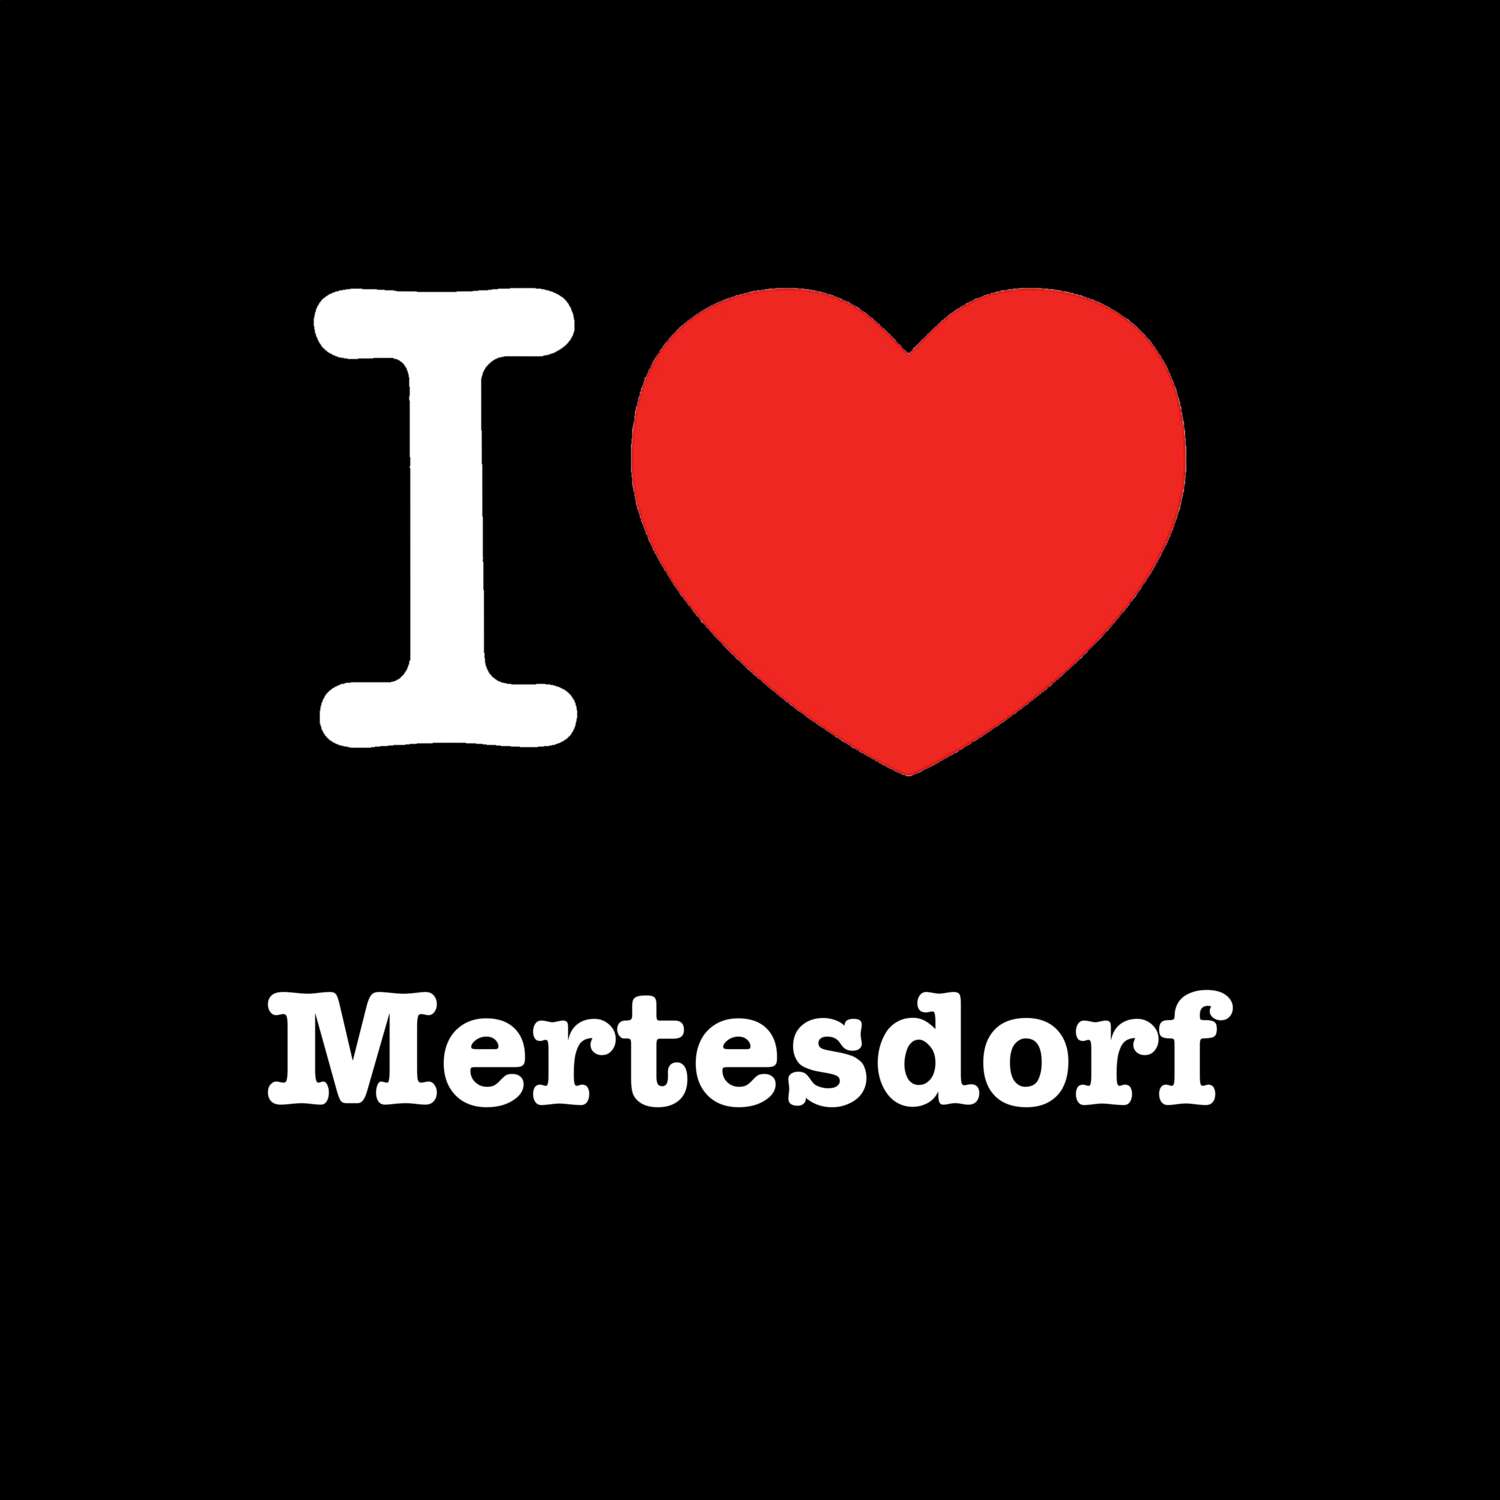 Mertesdorf T-Shirt »I love«